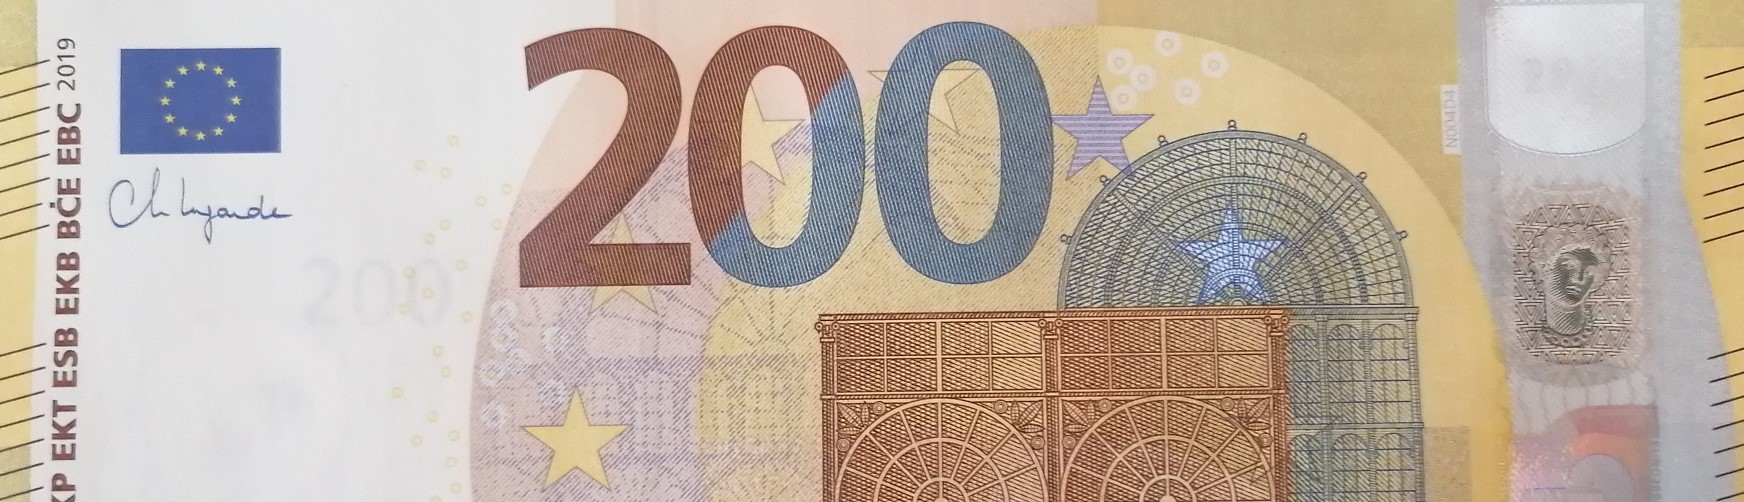 200 N N 004 Lagarde - Collection EUROPE